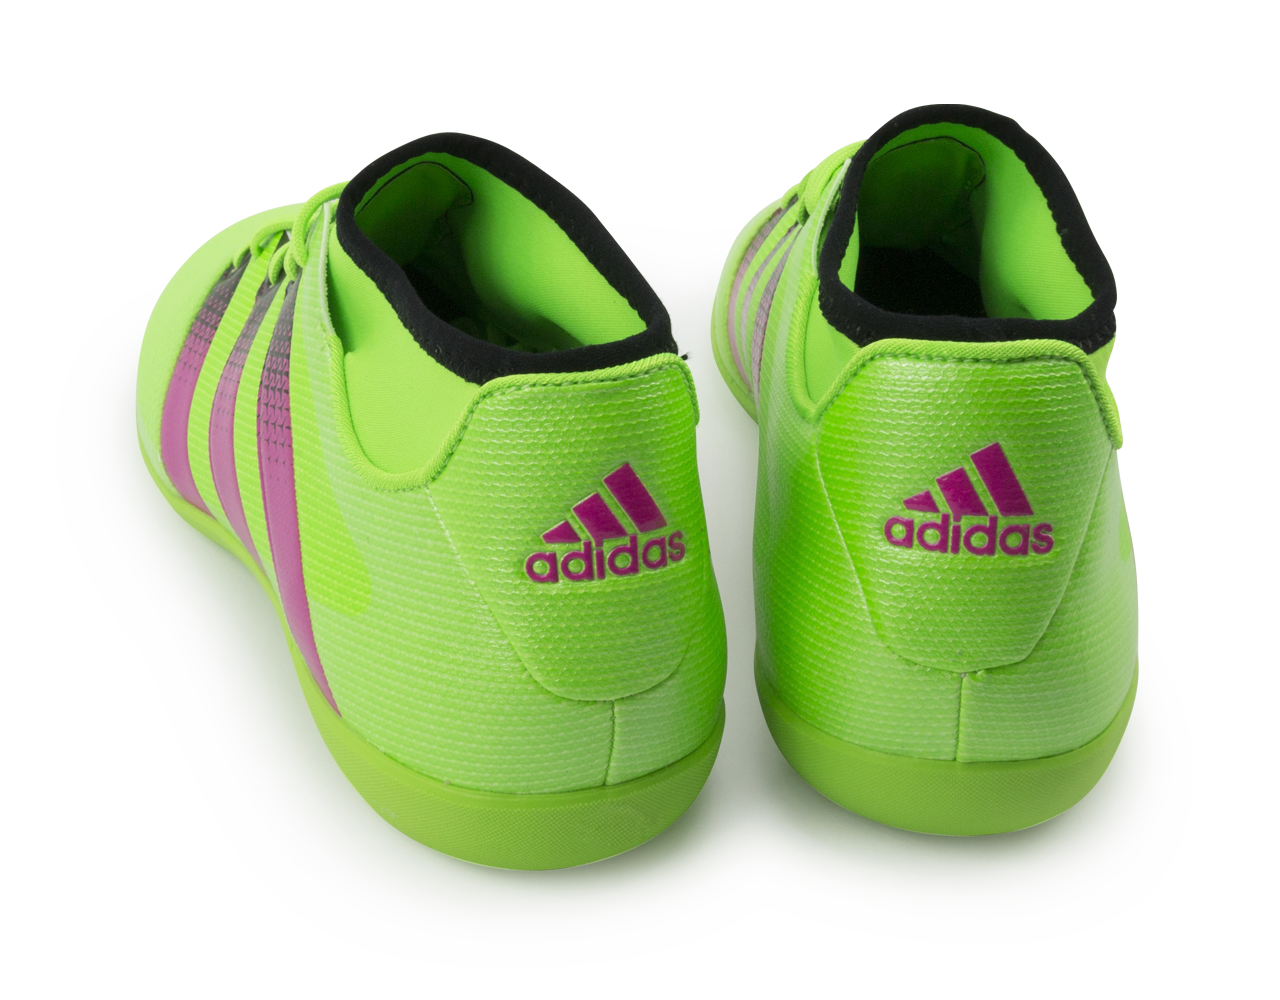 adidas Men's ACE 16.3 Primemesh Indoor Soccer Shoes Solar Green/Shock Pink/Black